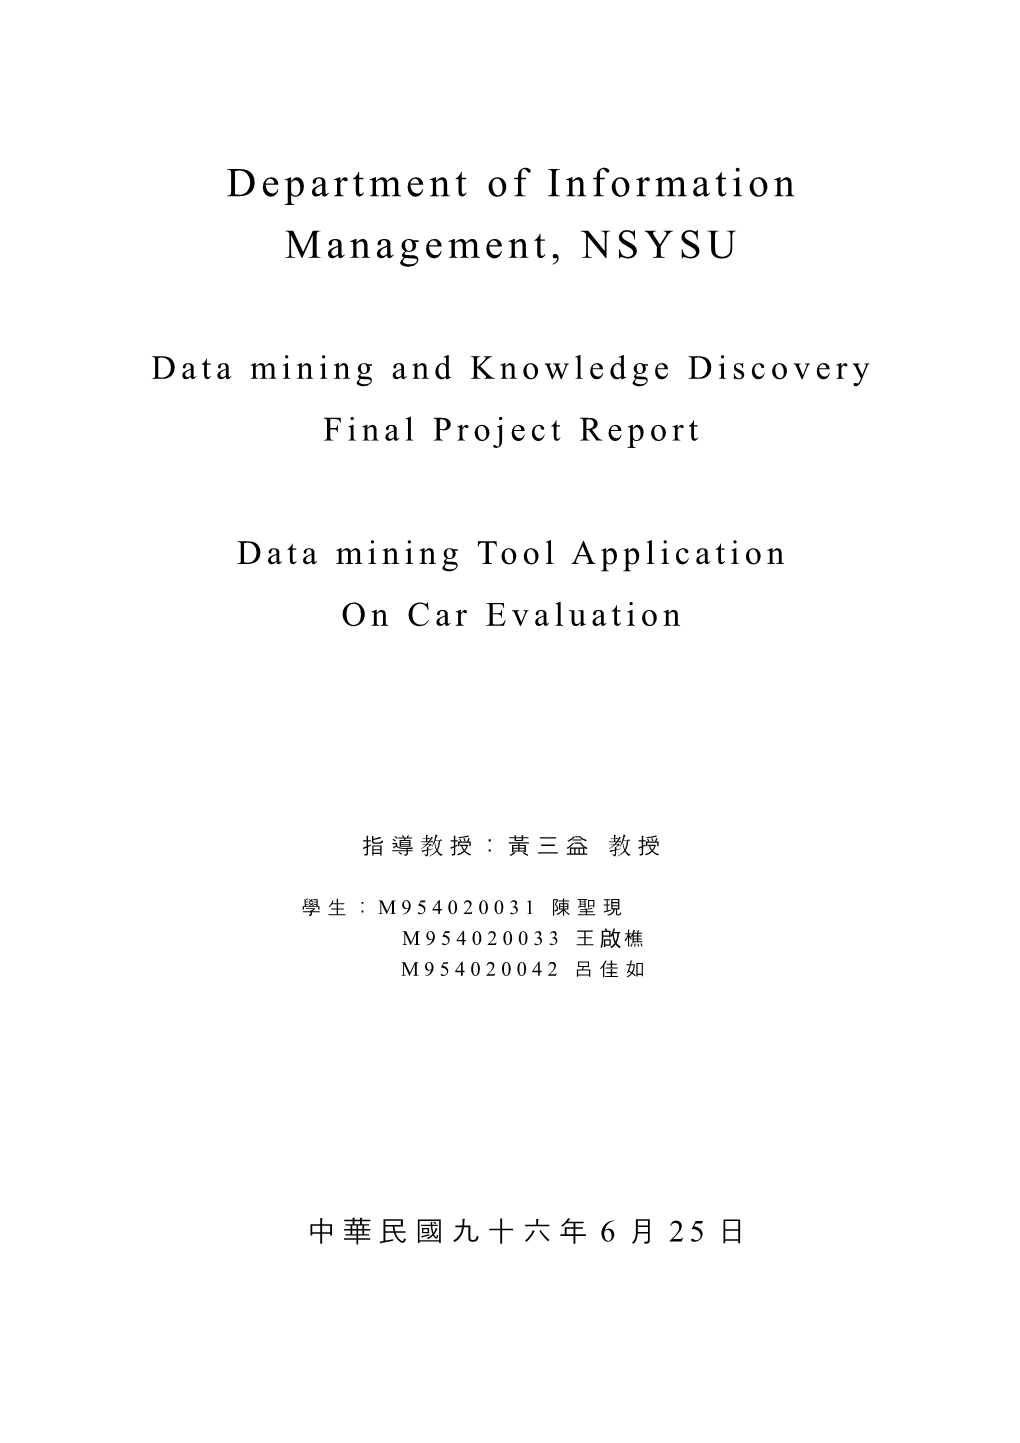 Department of Information Management, NSYSU